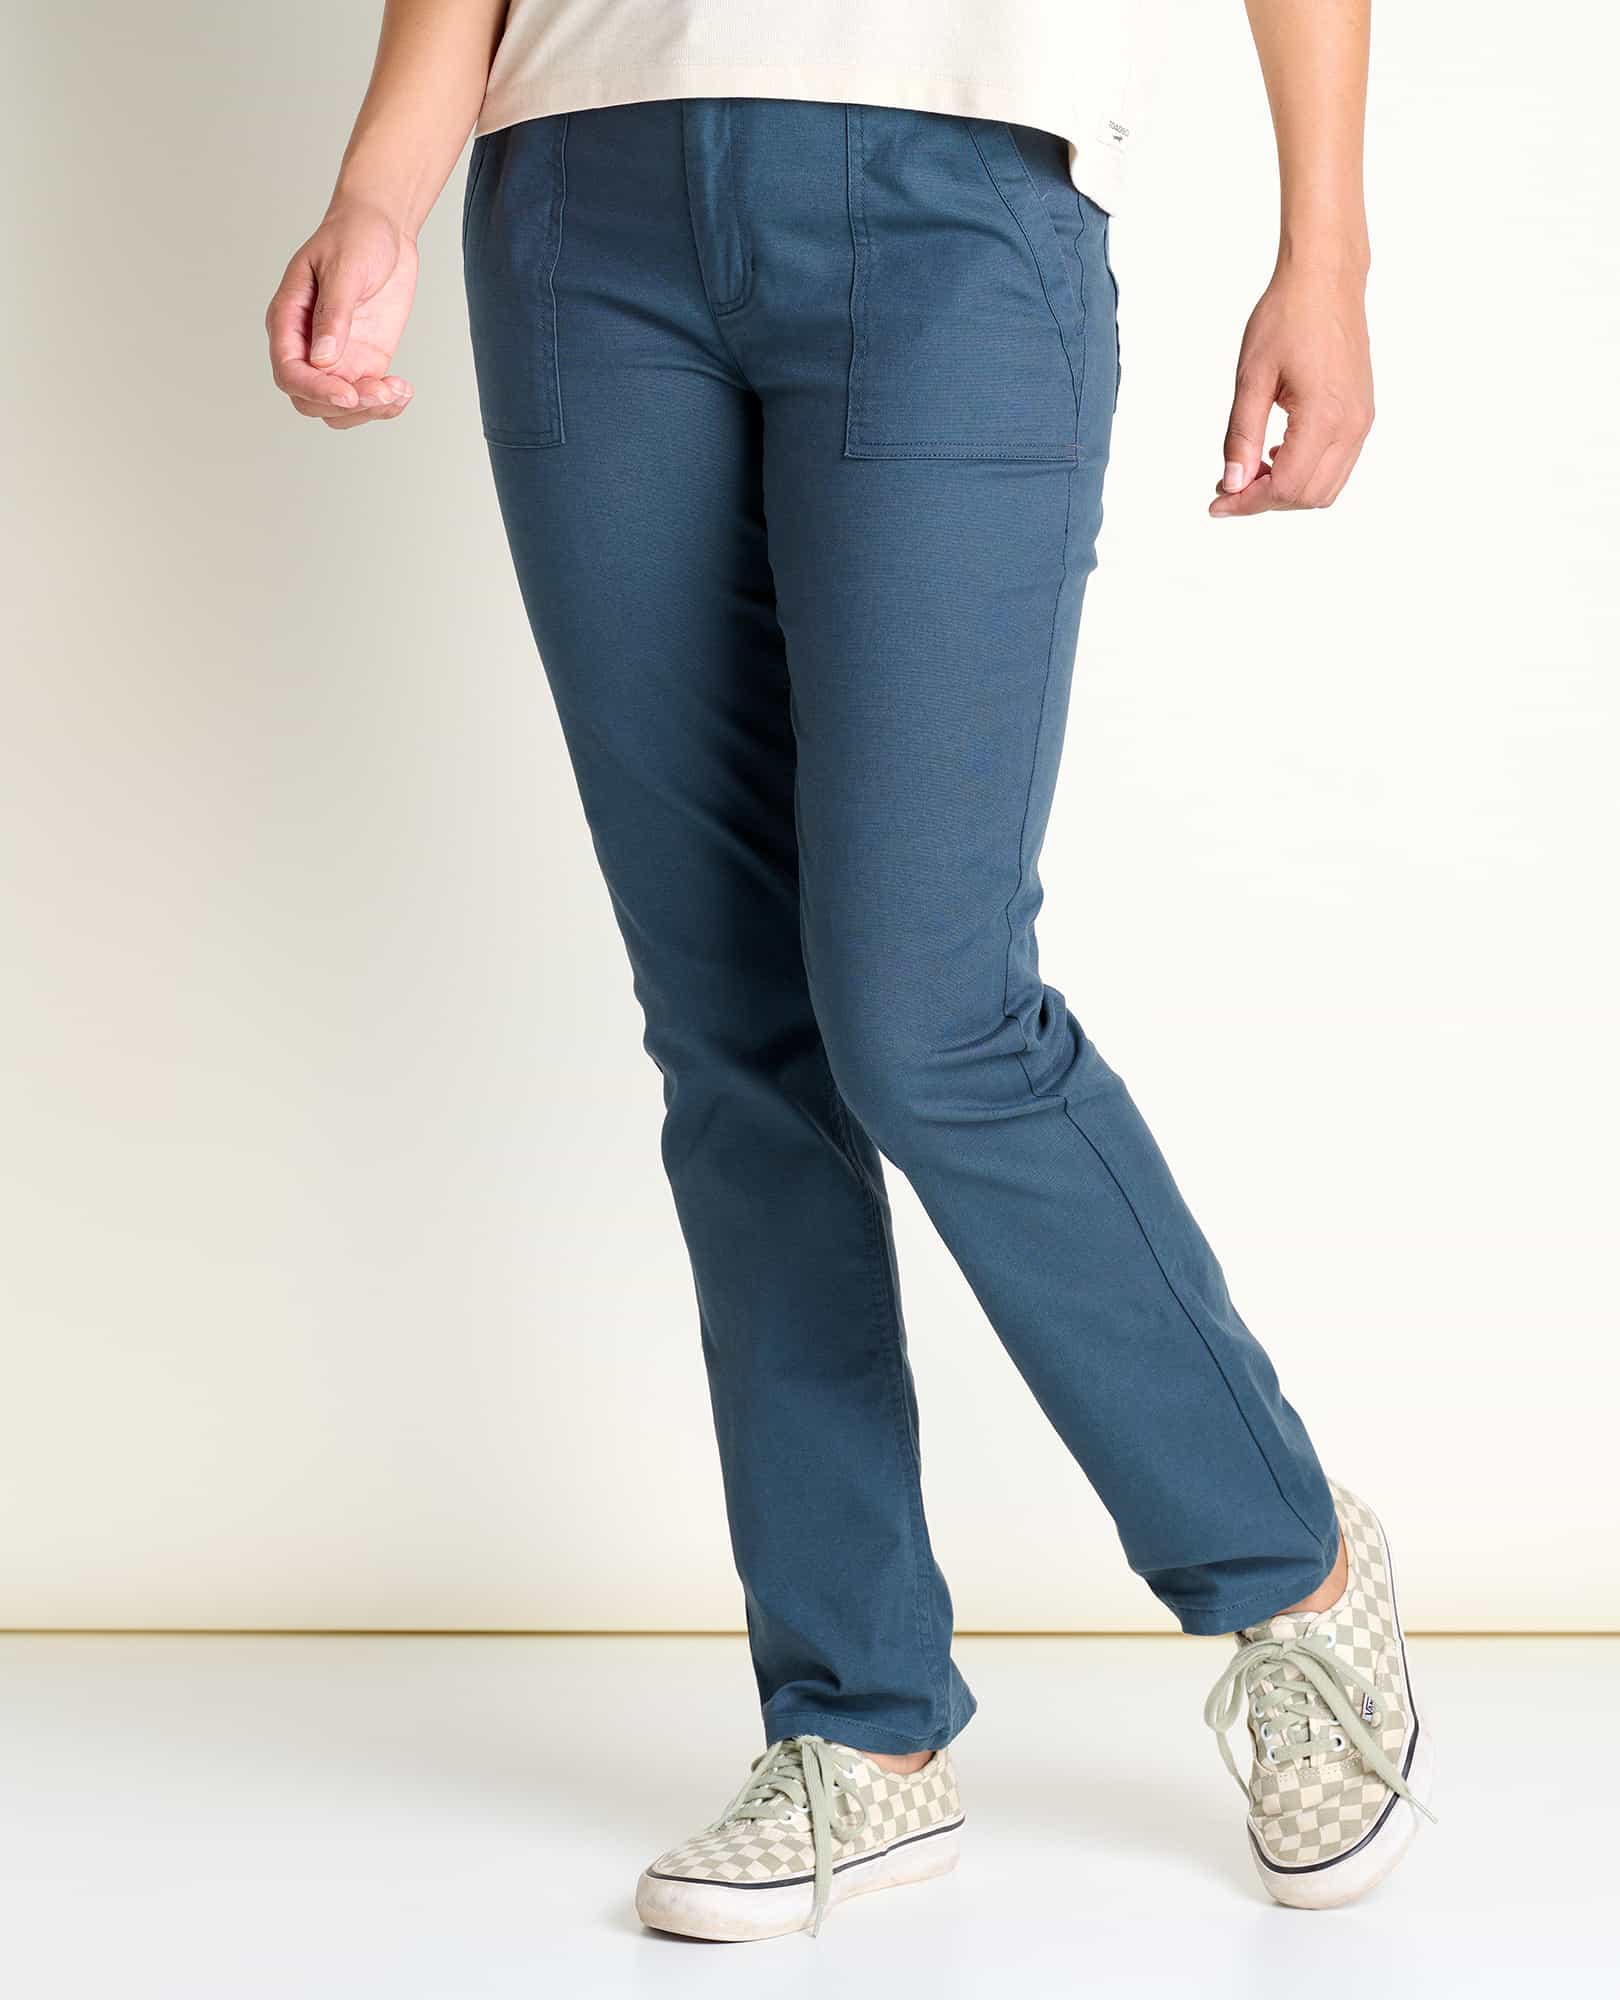 Brilliant Basics Women's Short Length Skinny Work Pant - Black - Size 6